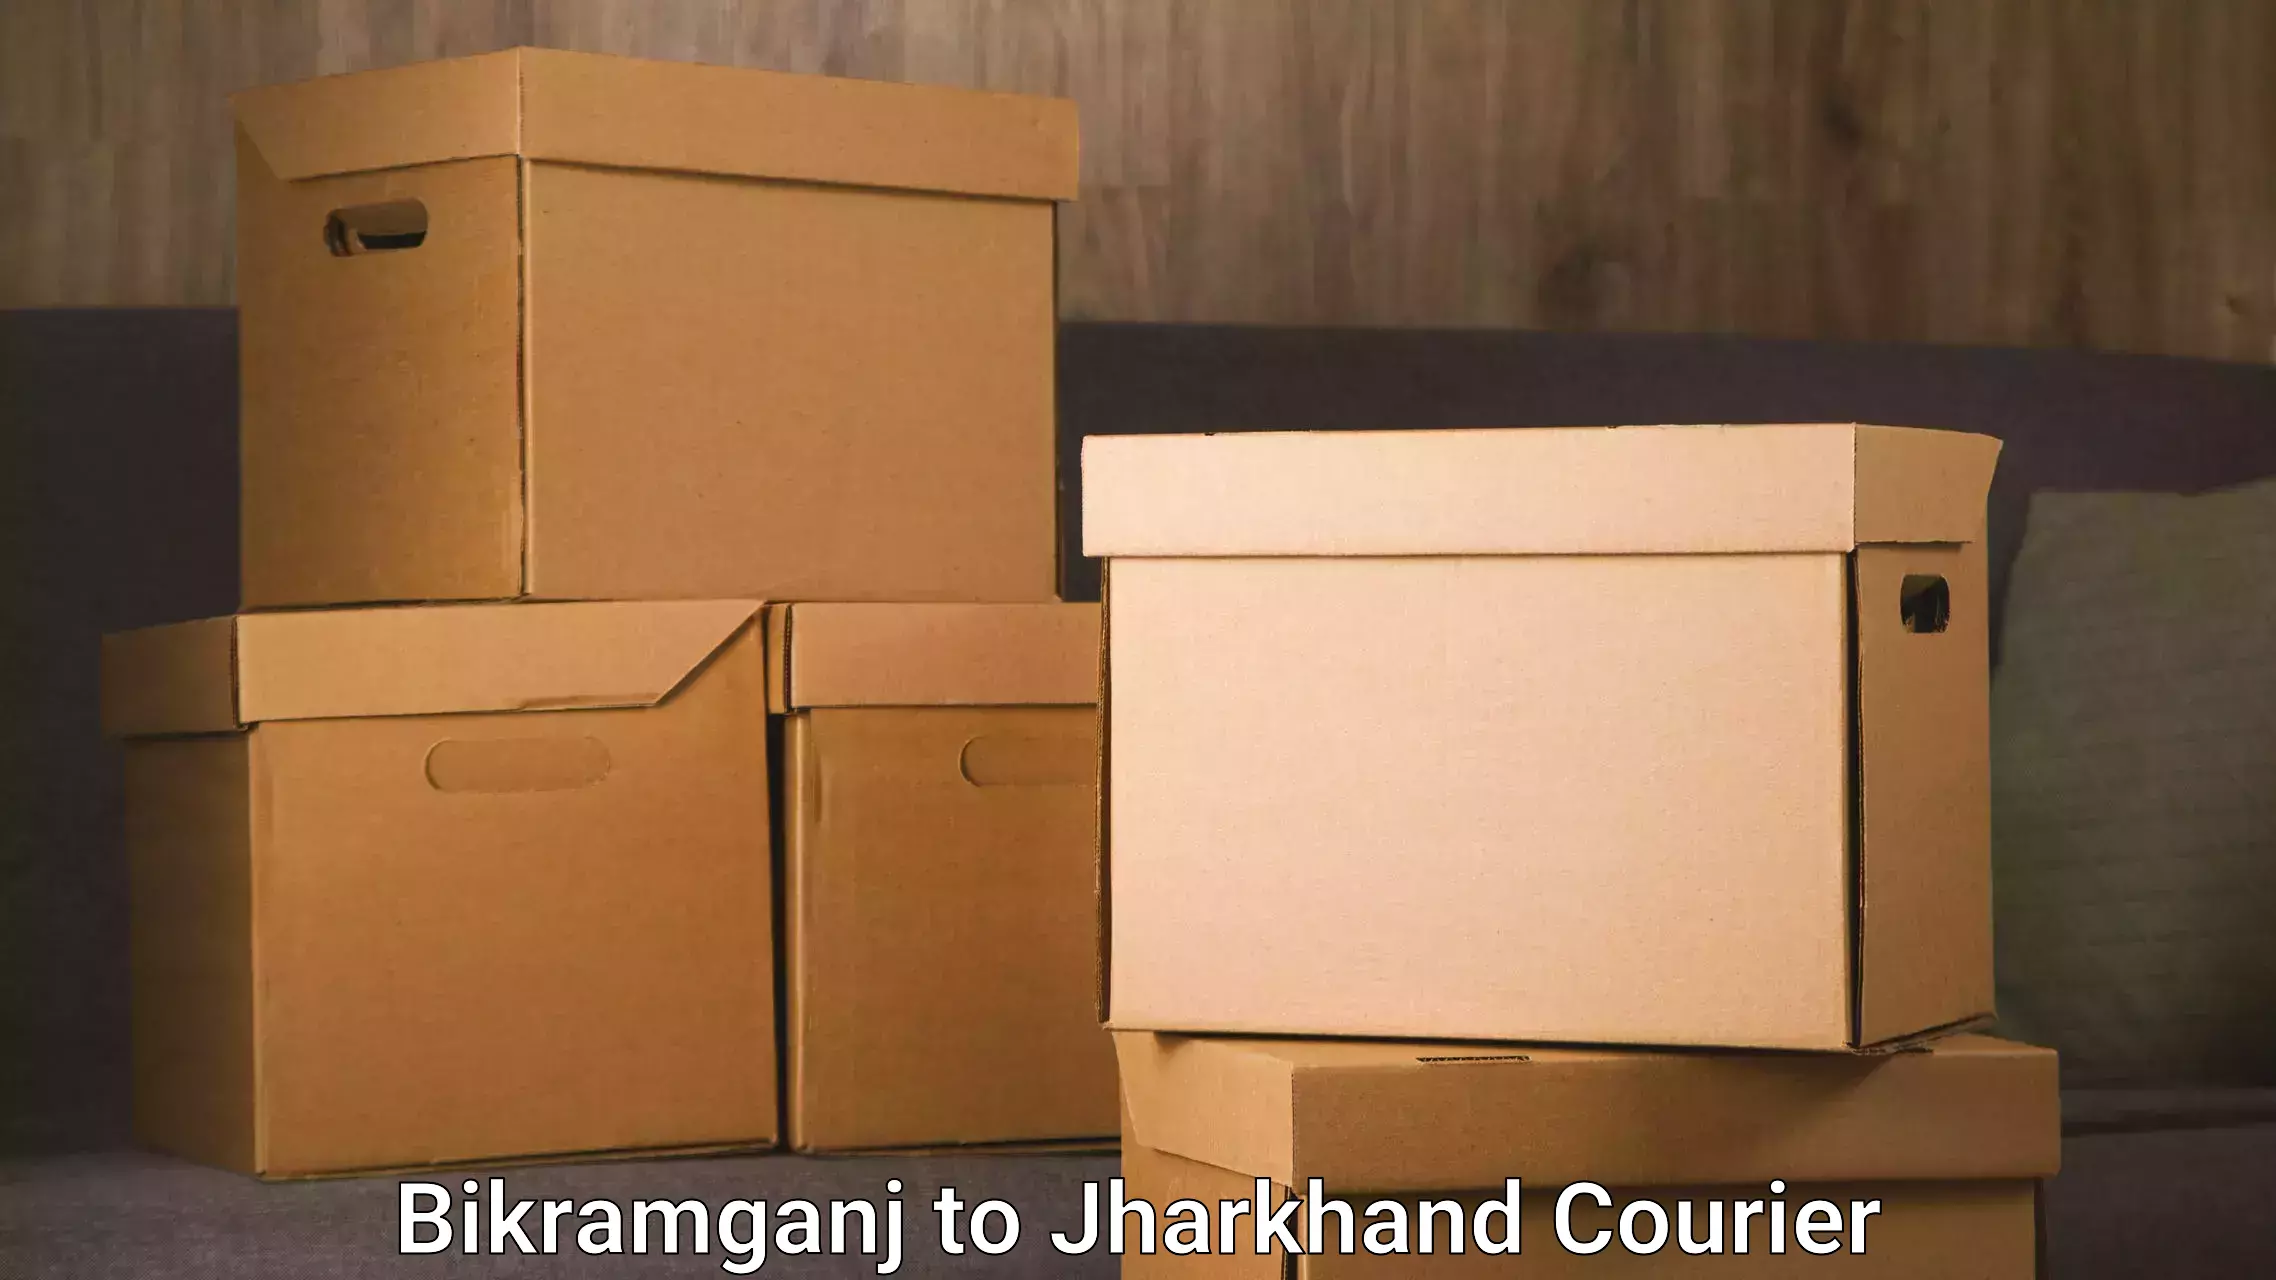 Professional moving company Bikramganj to Padma Hazaribagh